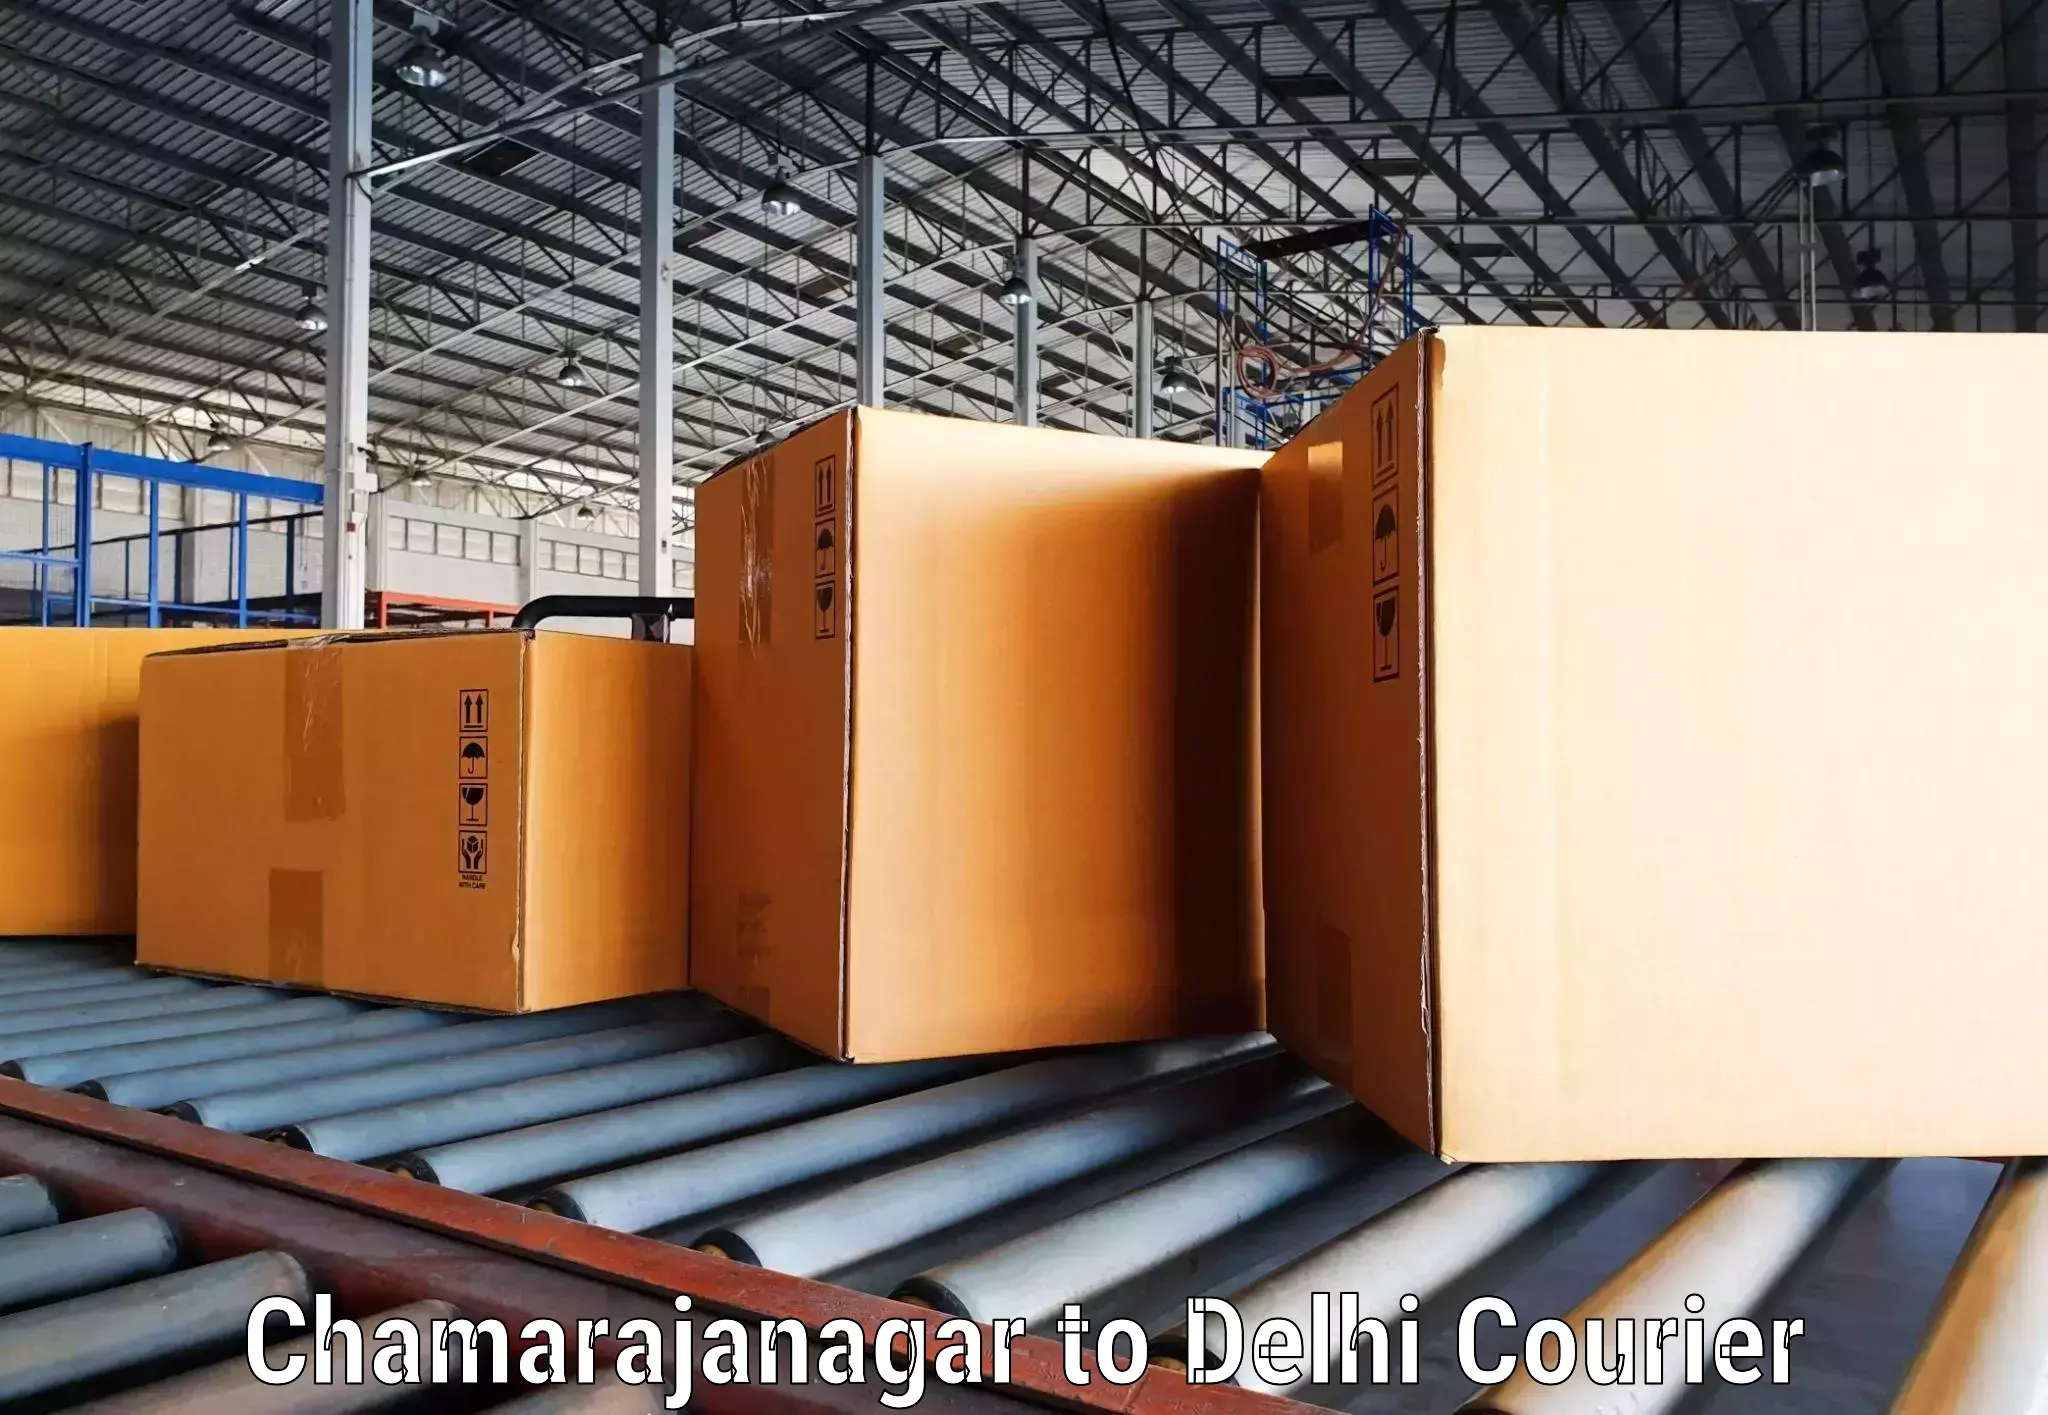 Digital courier platforms Chamarajanagar to Krishna Nagar